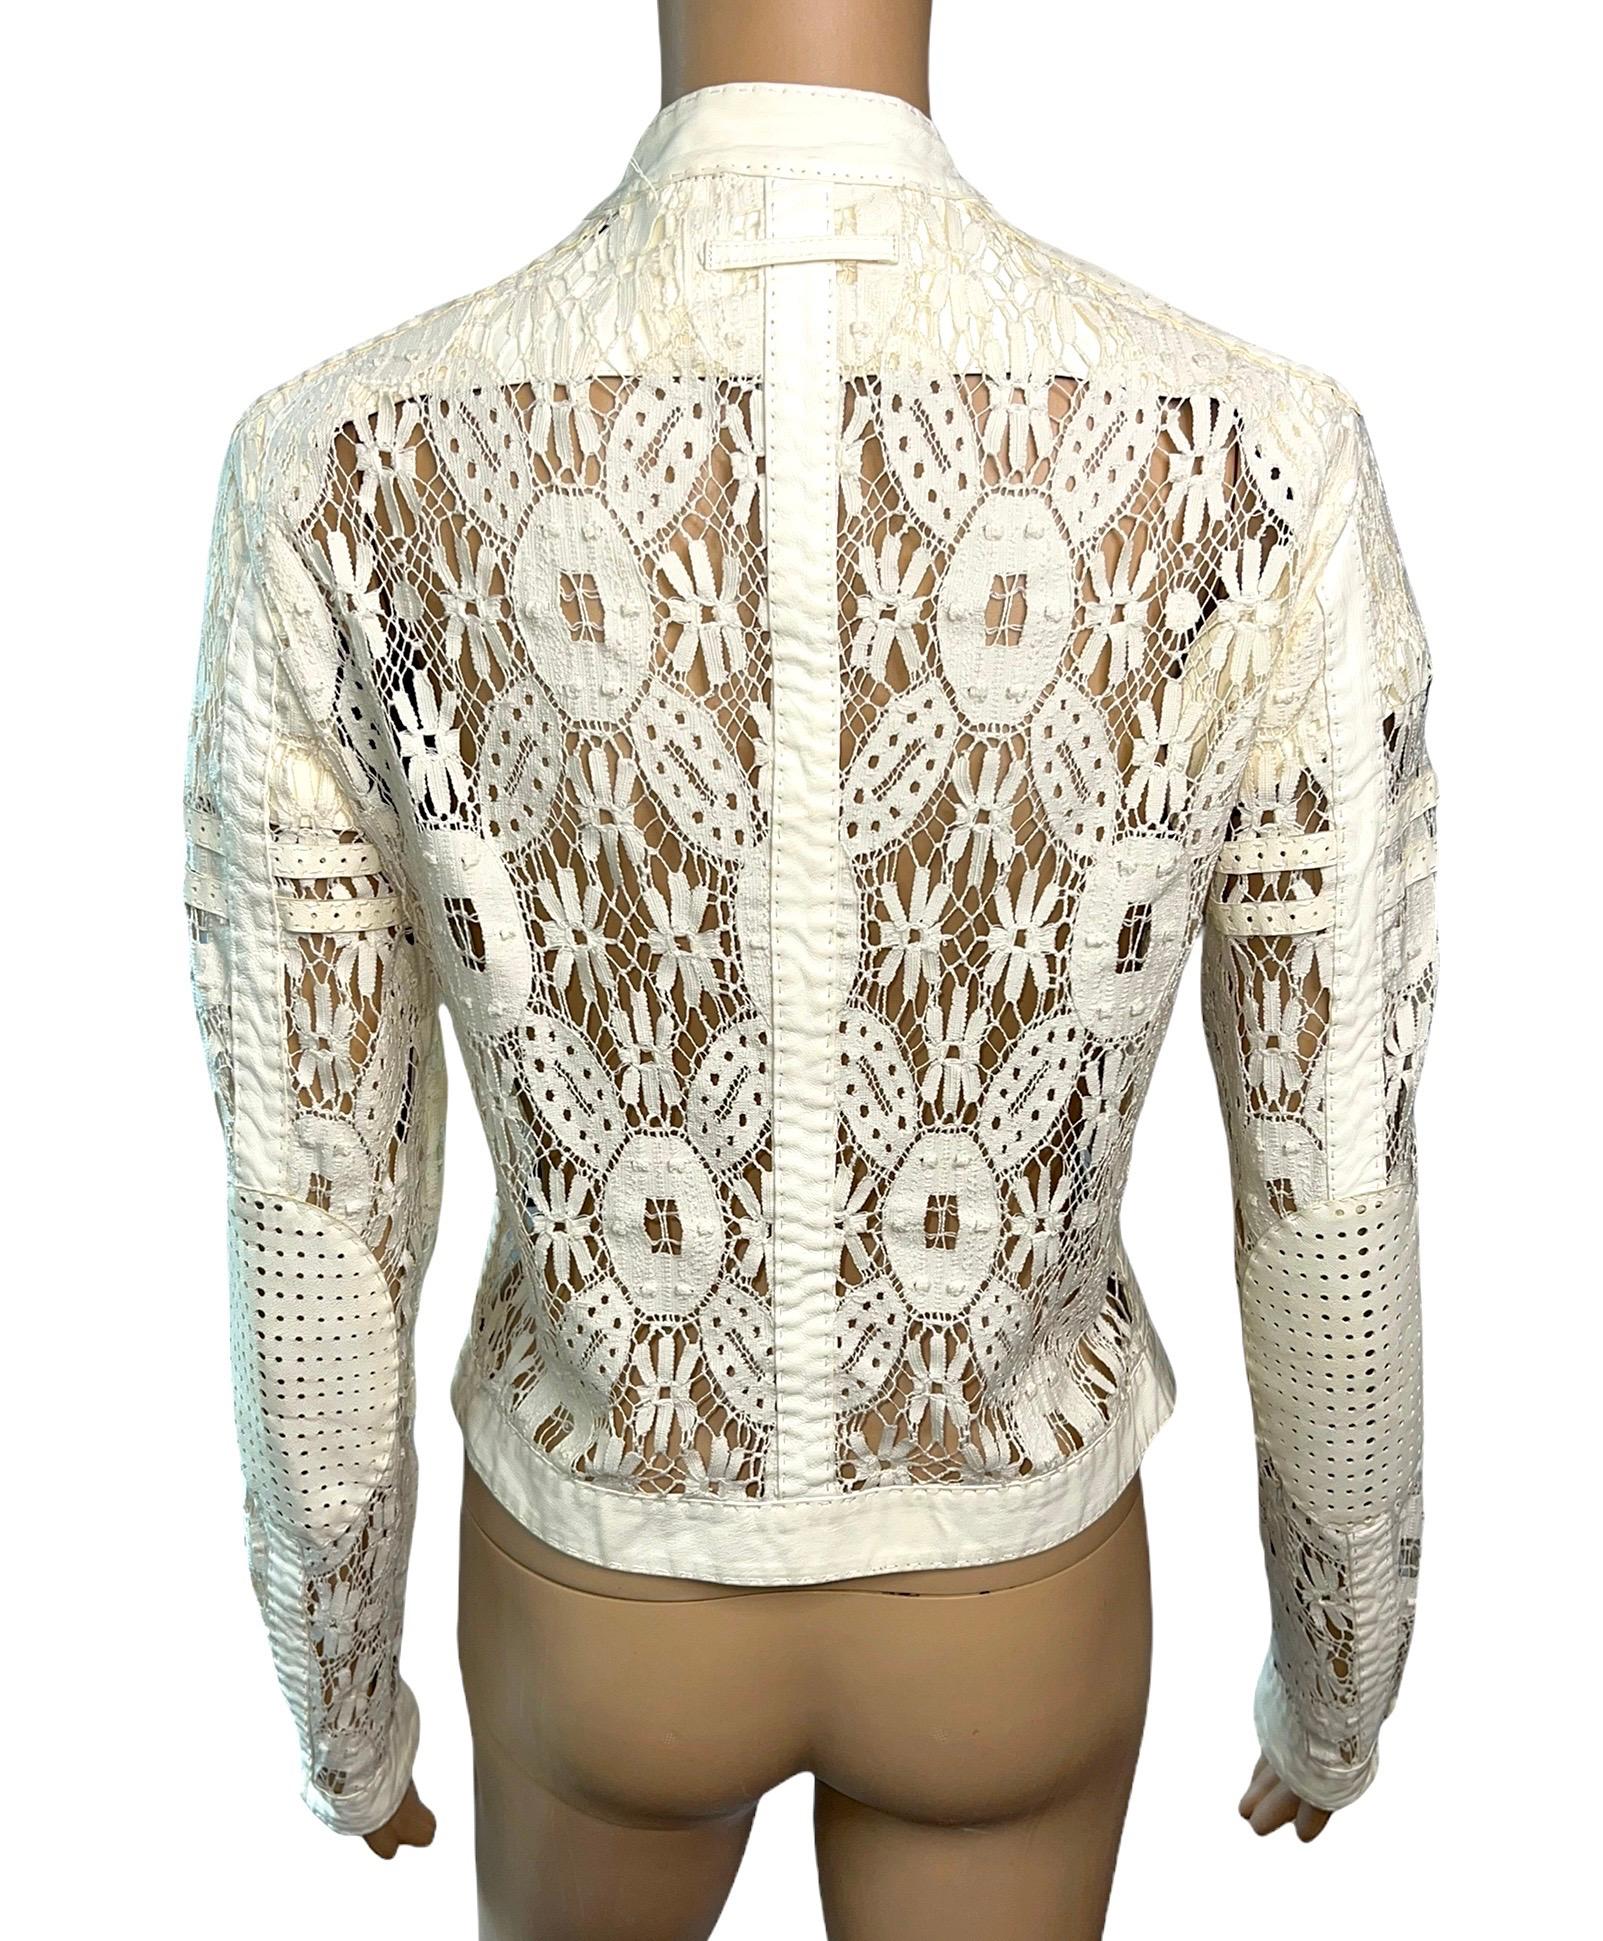 Jean Paul Gaultier Sheer Lace Inserts Cutout Ivory Top Jacket IT 38
